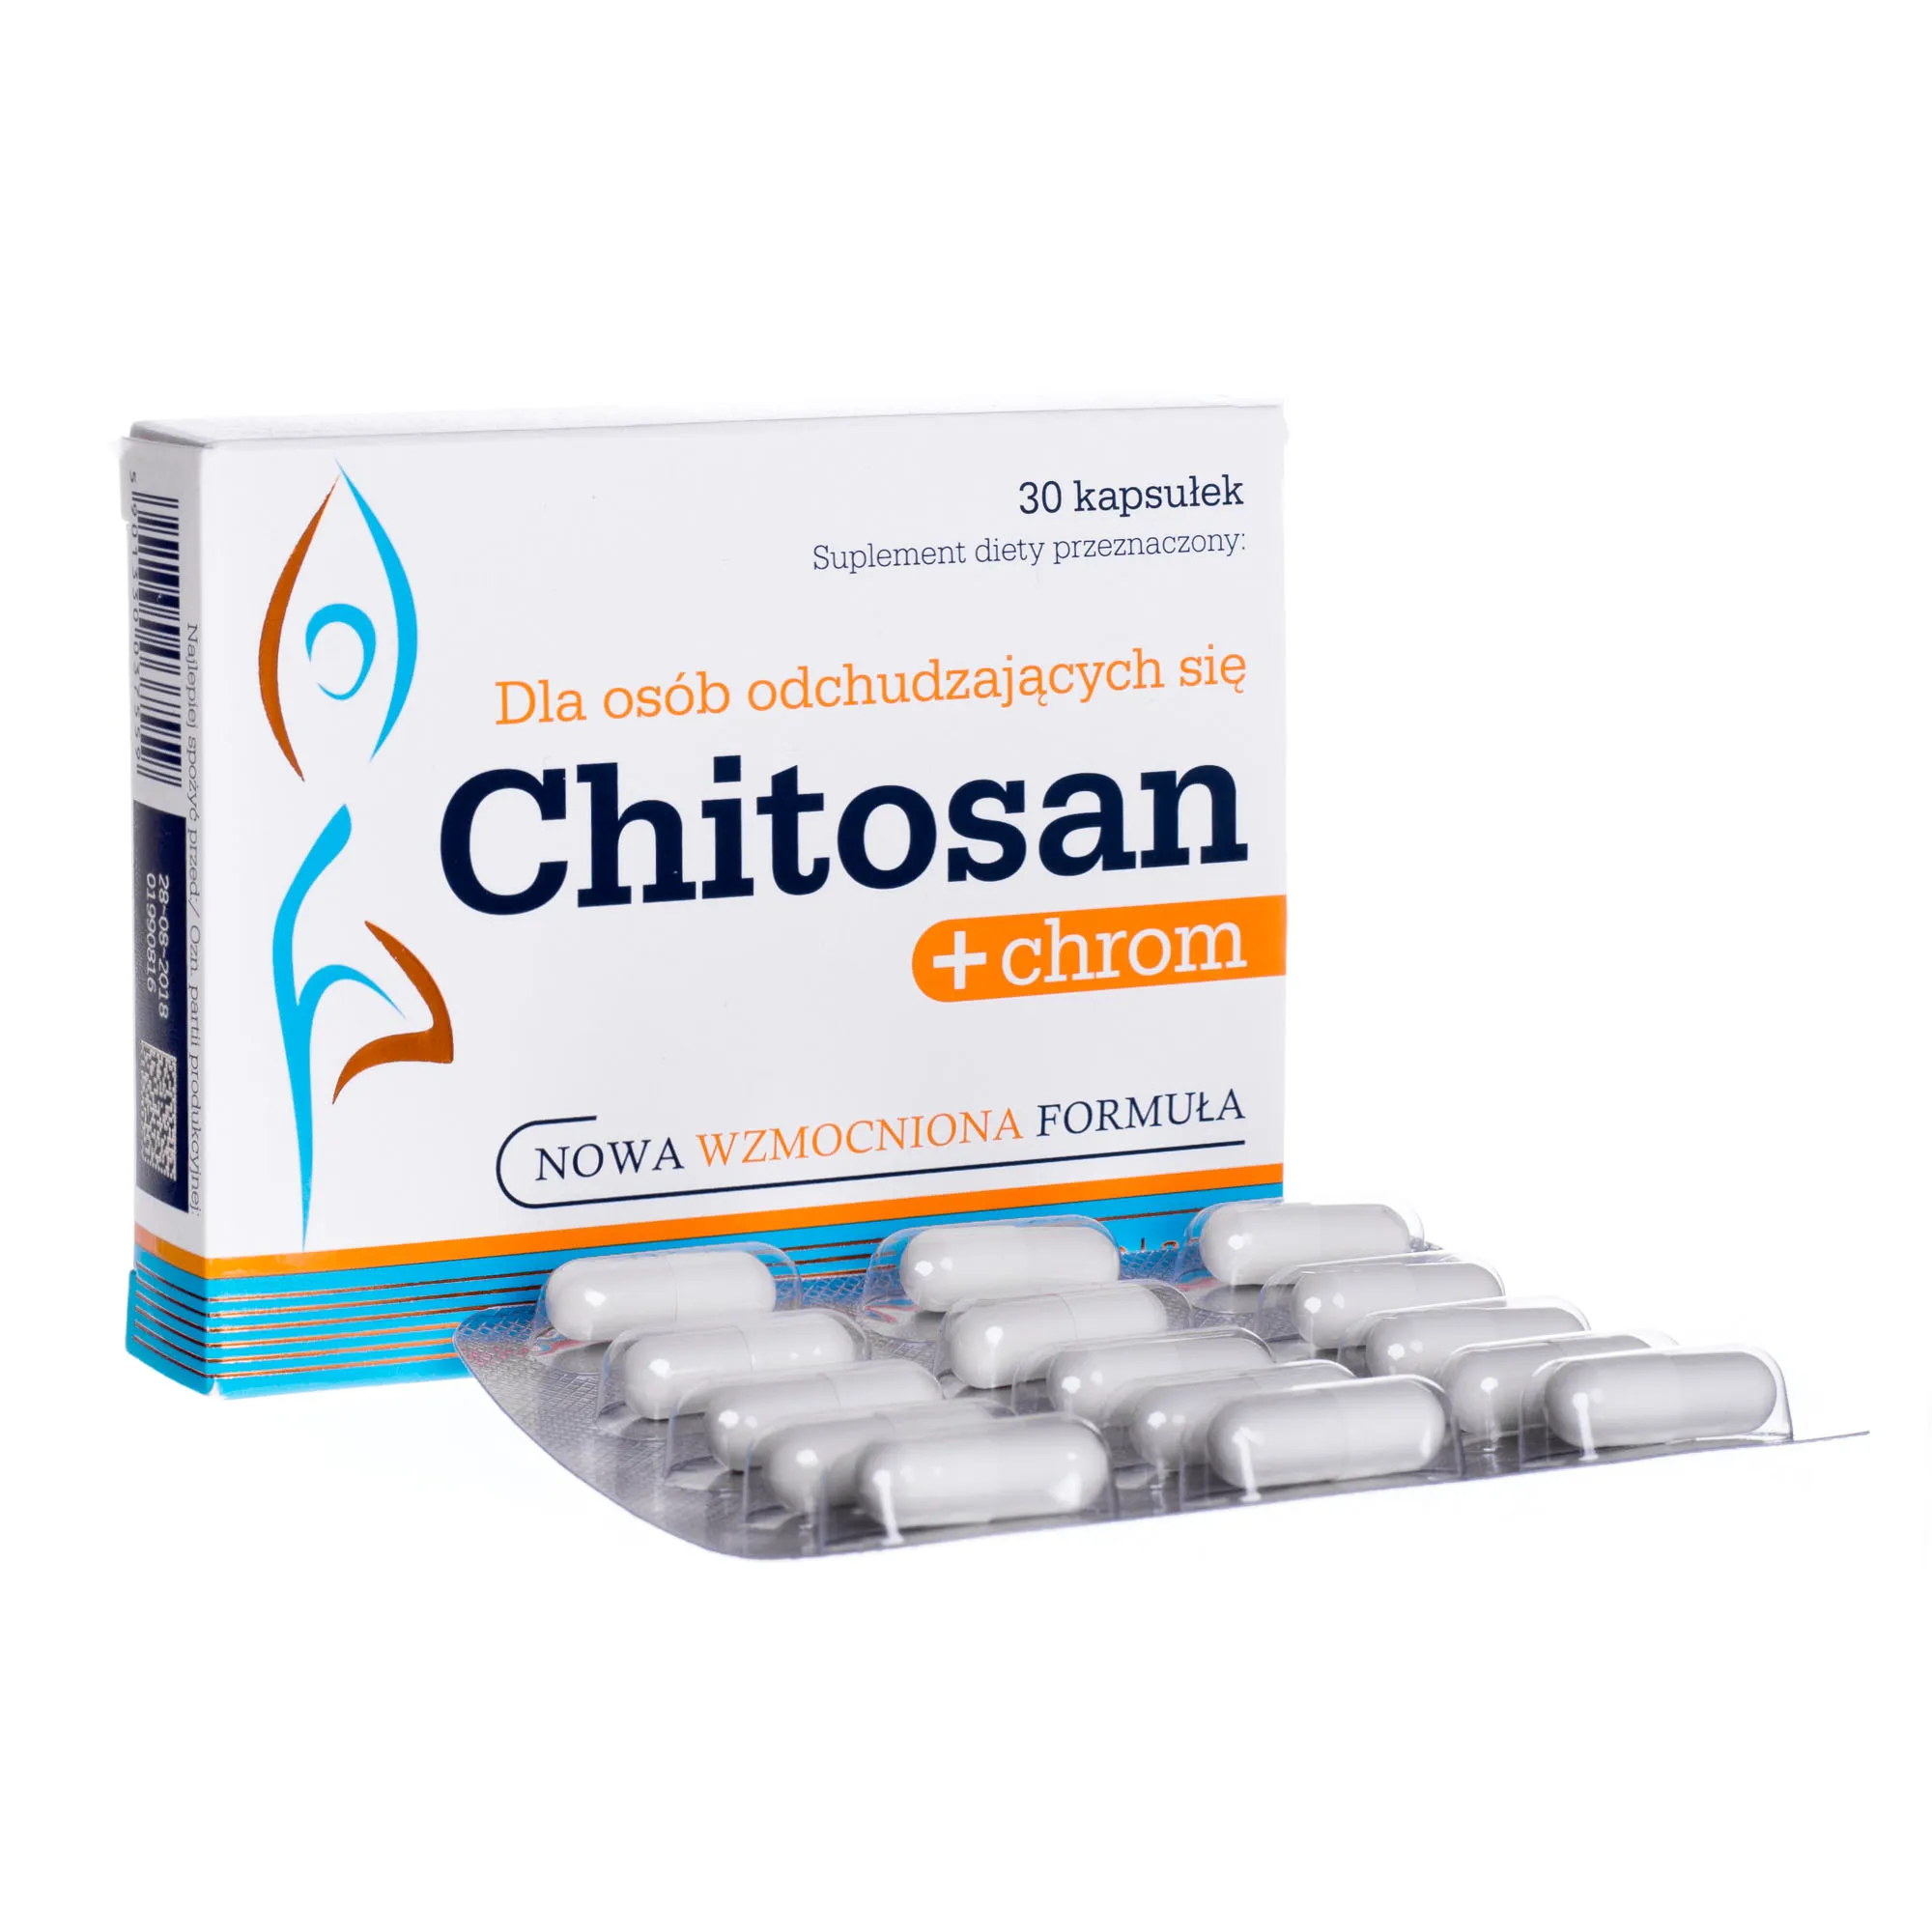 Olimp Chitosan + chrom, suplement diety, 30 kapsułek